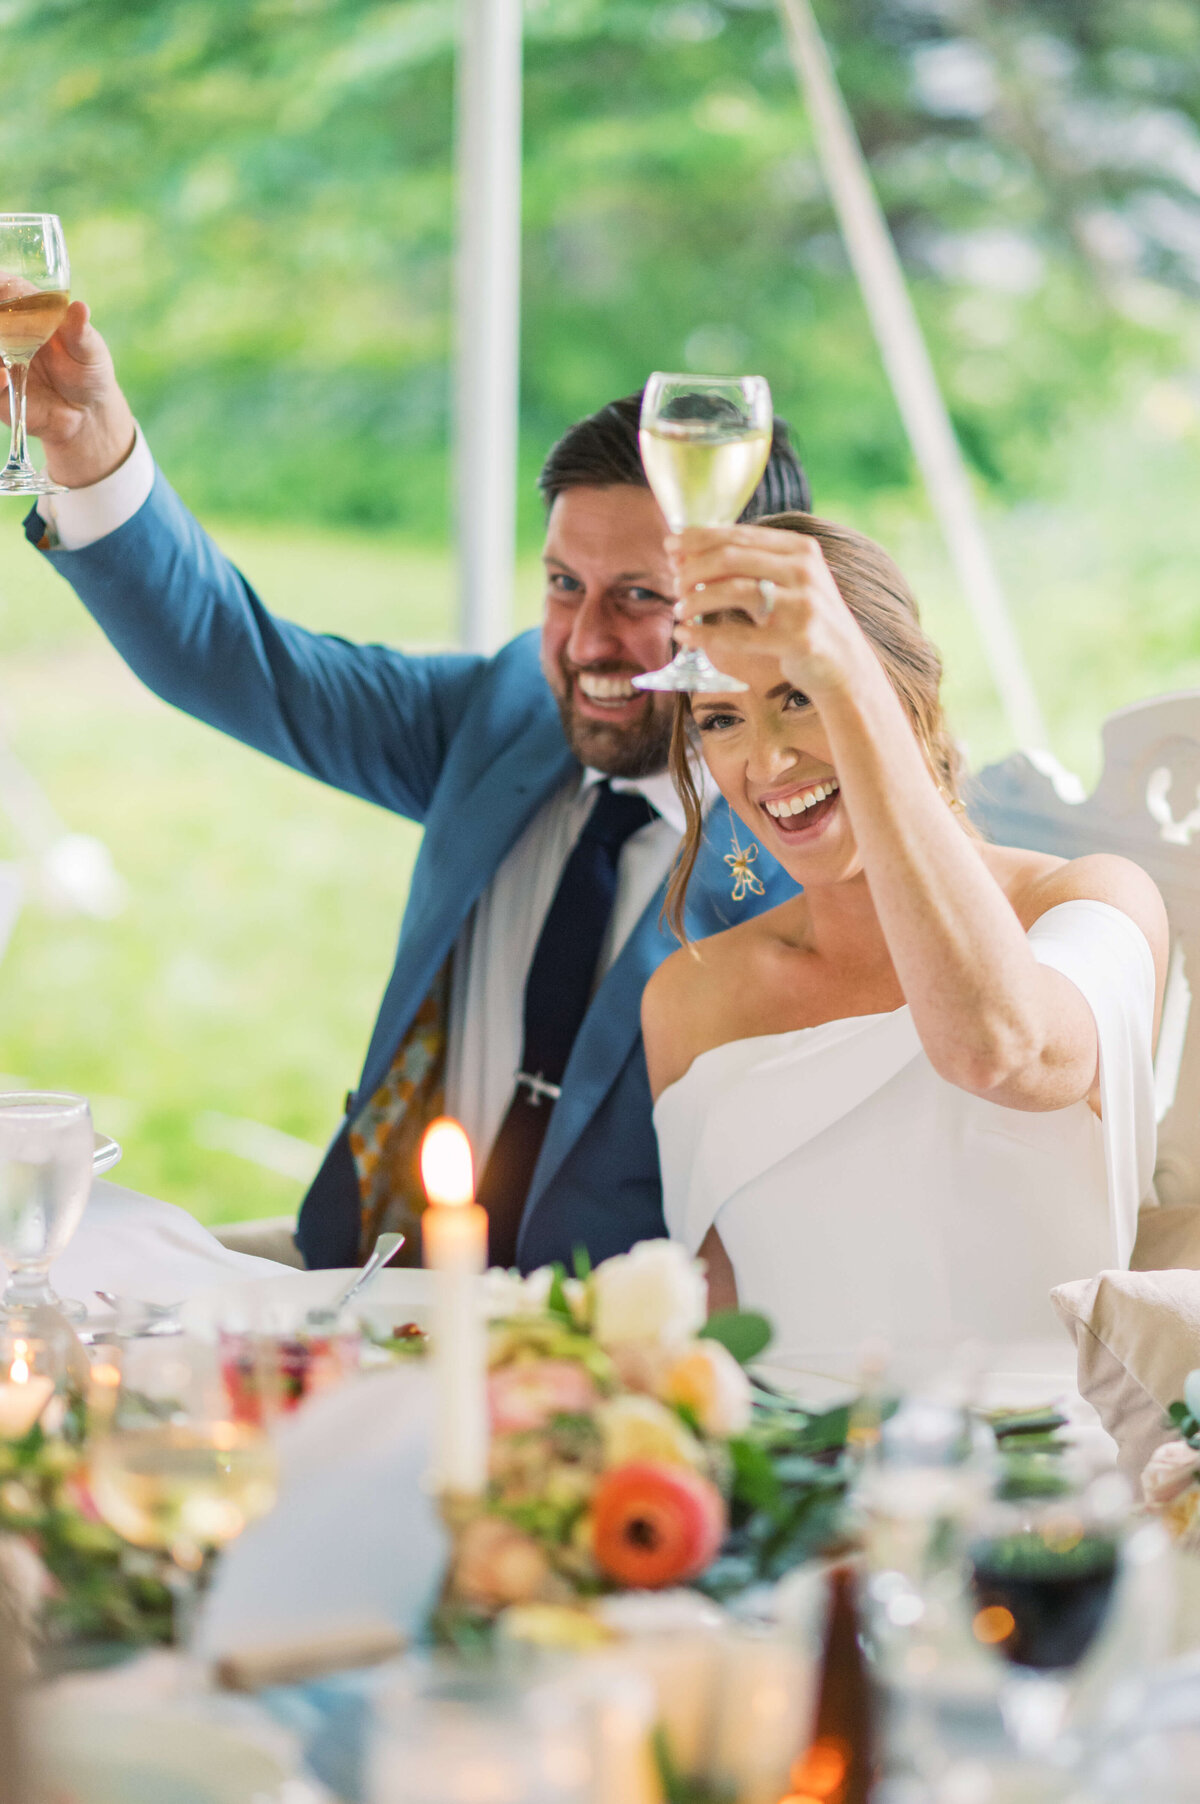 Bride and groom raising glasses at Oceanstone Resort Wedding reception in Nova Scotia